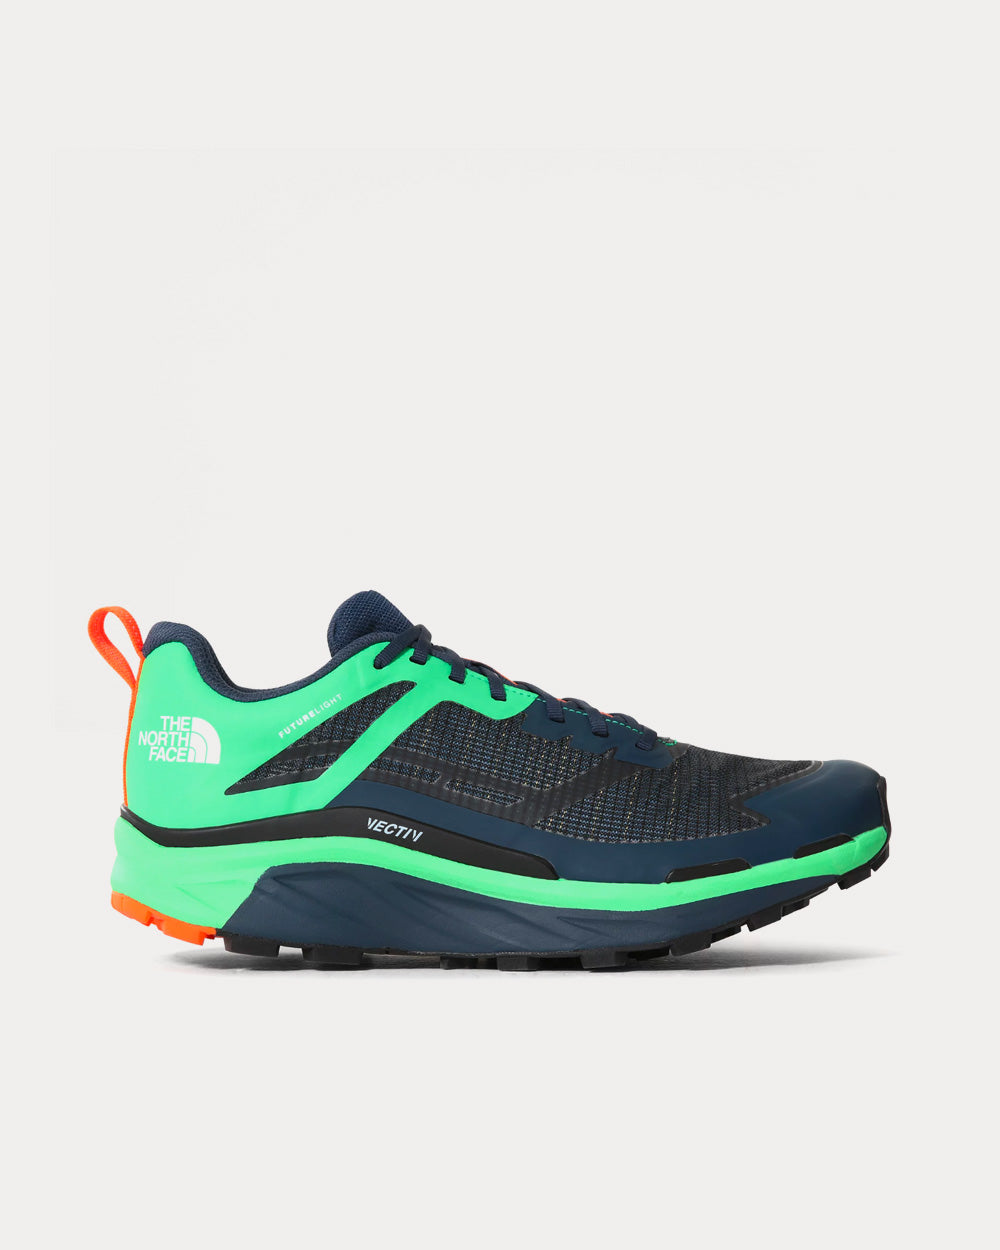 Vectiv™ Futurelight™ Infinite Reflect Montery Blue / Chlorophyll Green  Running Shoes